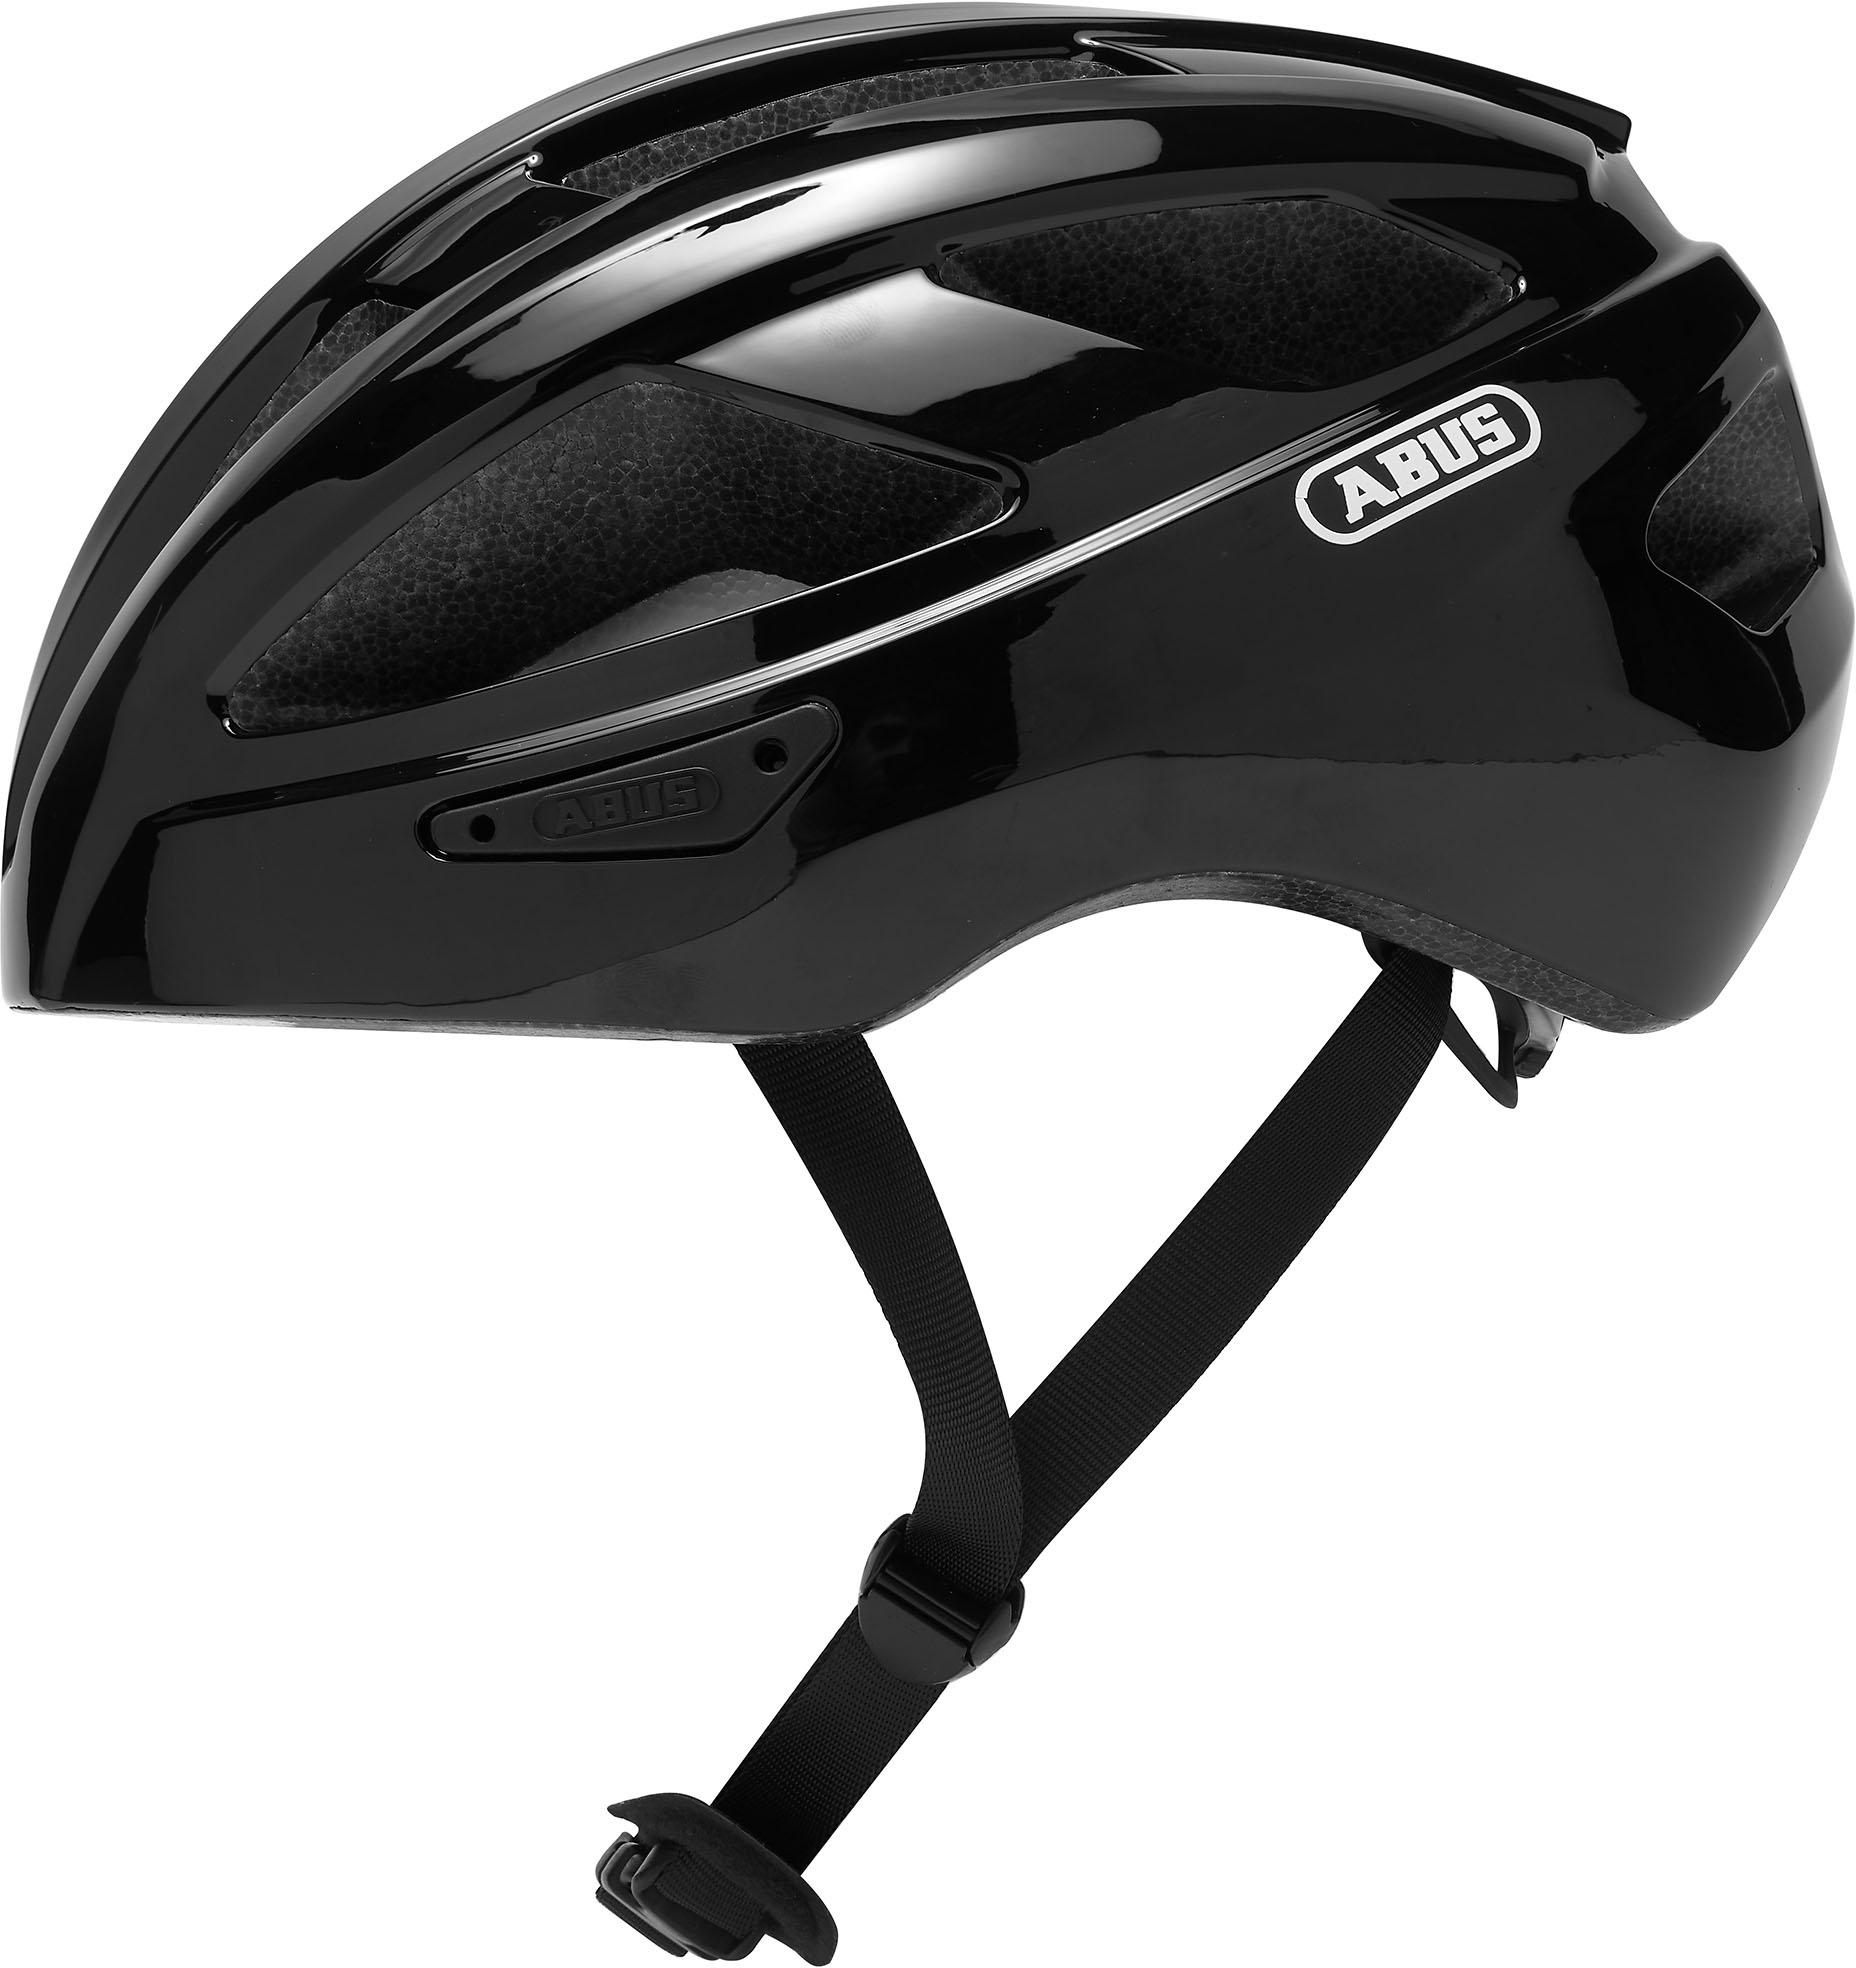 Abus Macator Road Cycling Helmet - Glossy Black